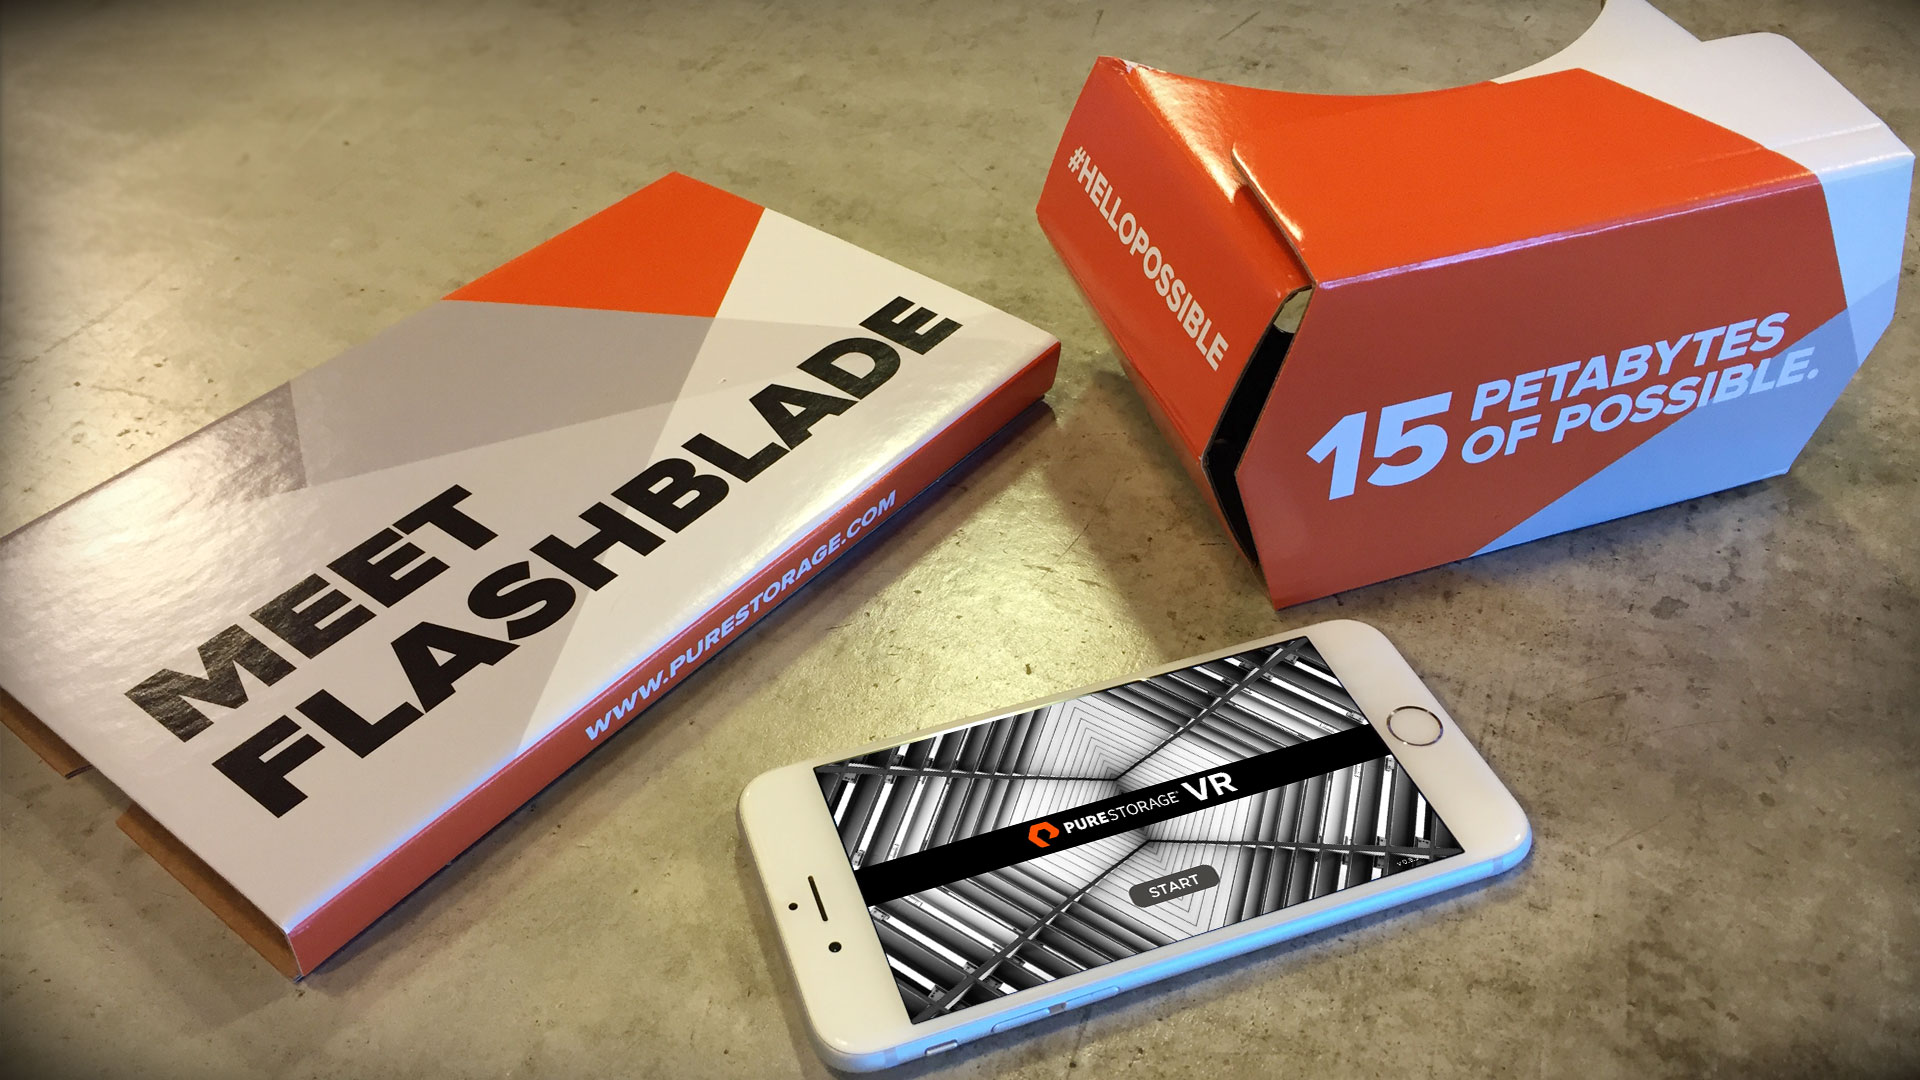 PureStorage VR Mobile App - Google Cardboard